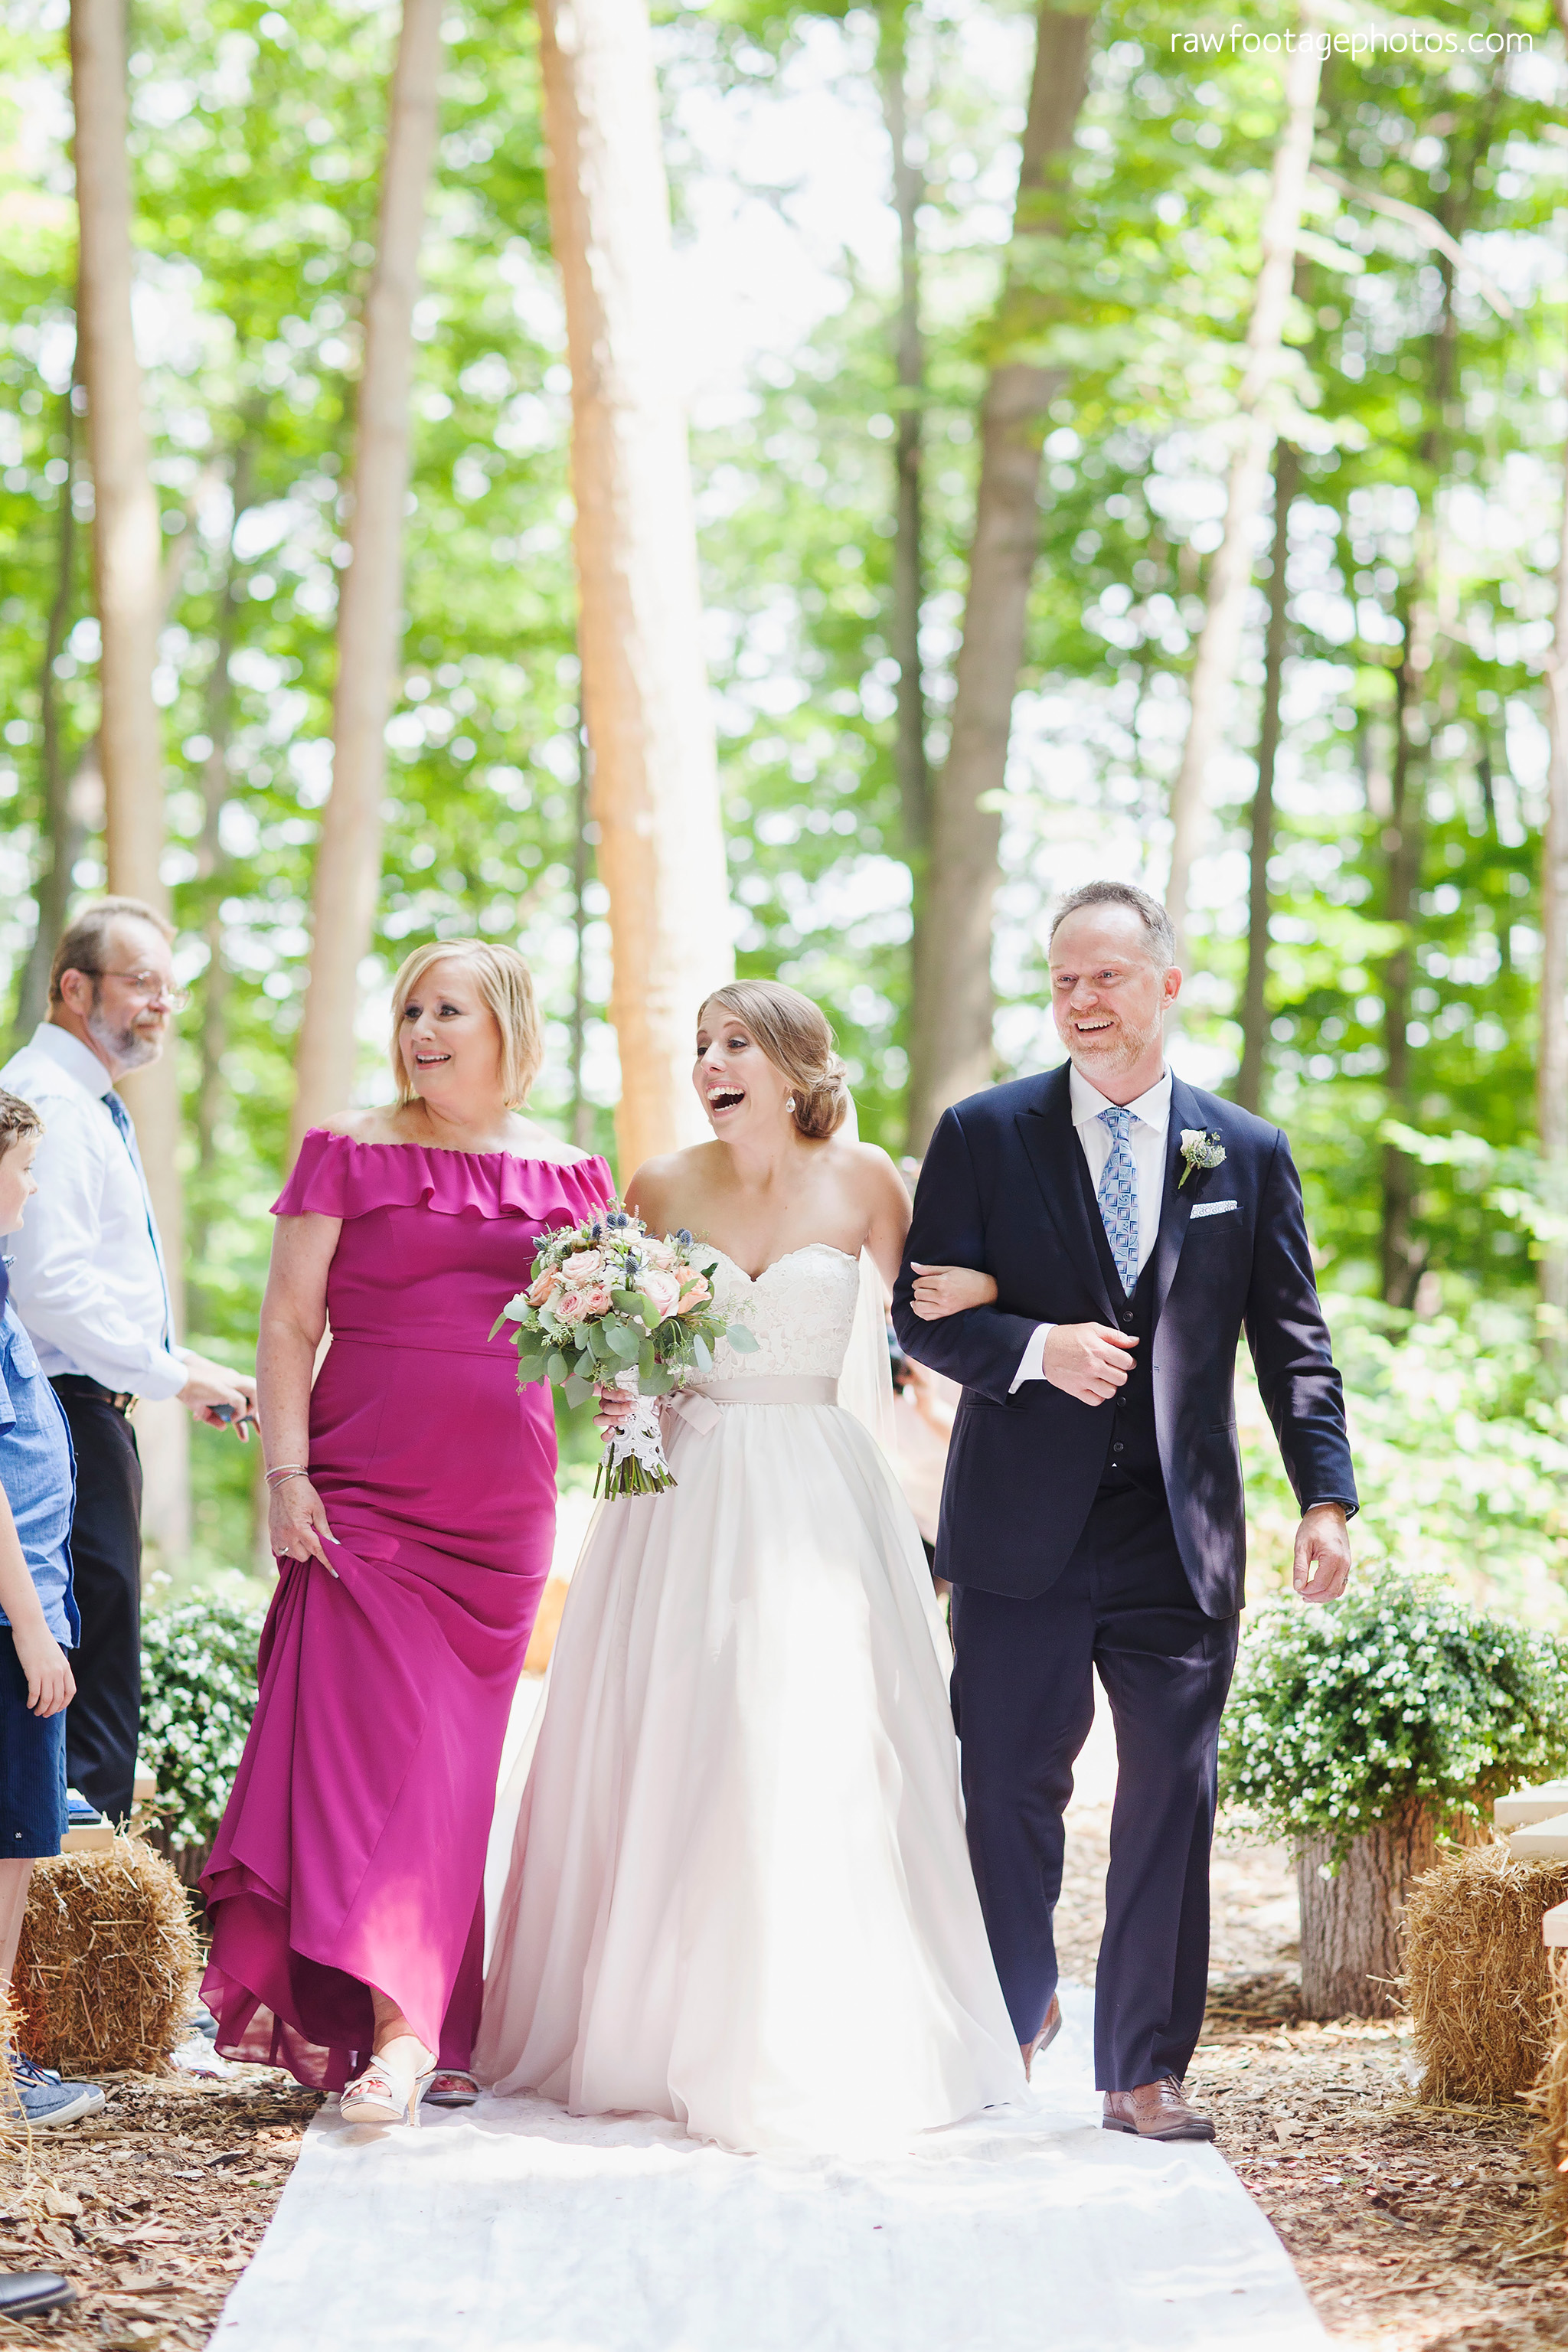 London_Ontario_Wedding_Photographer-Raw_Footage_photography-Forest_wedding-Woodsy_wedding-DIY_Wedding-Candid_Wedding_Photography022.jpg